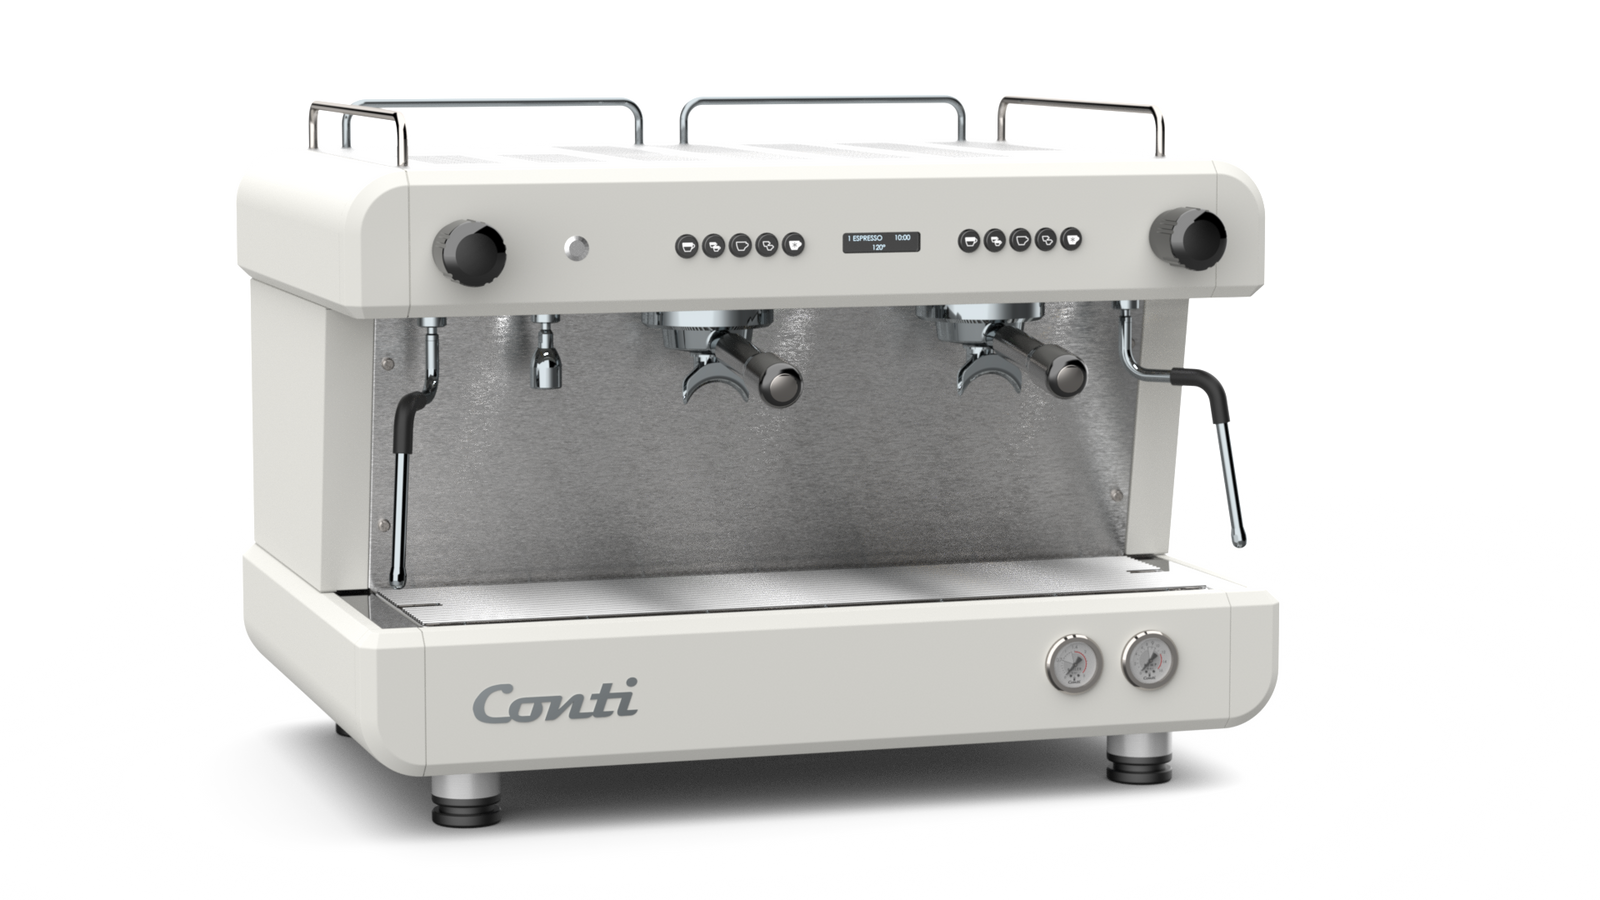 Barista T Plus White Commercial Coffee Machine